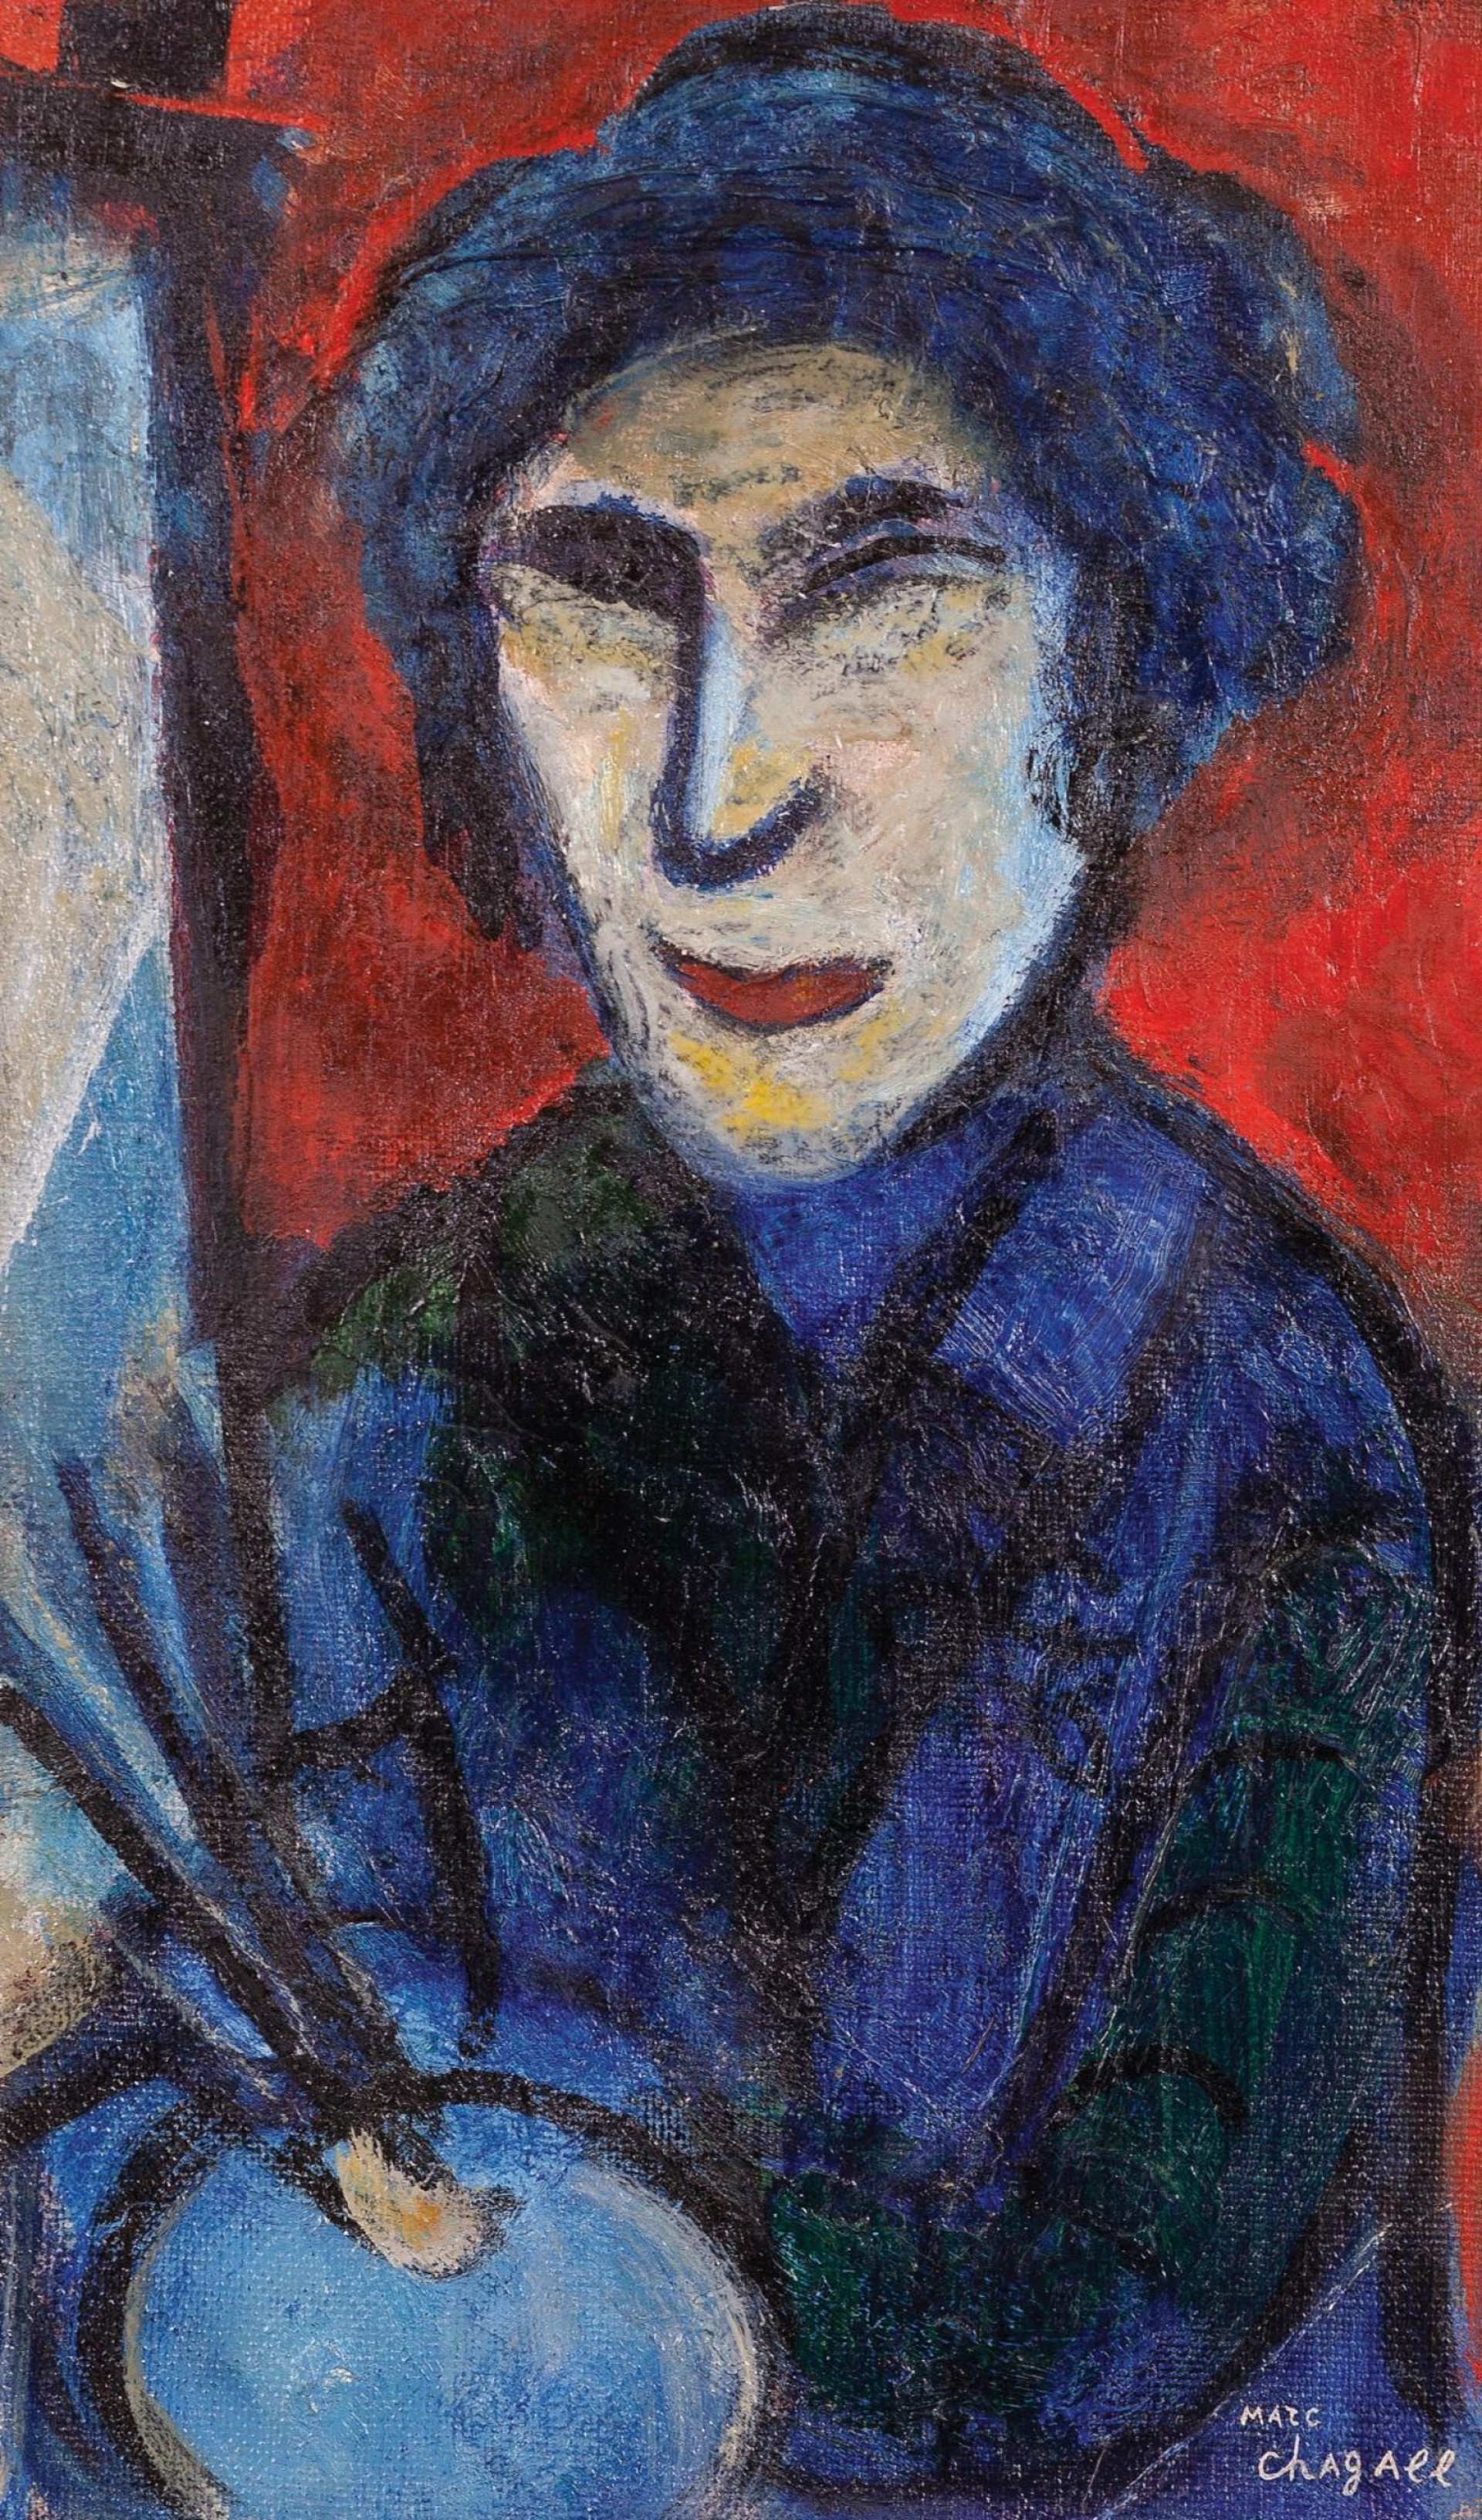 EA_Chagall.jpg